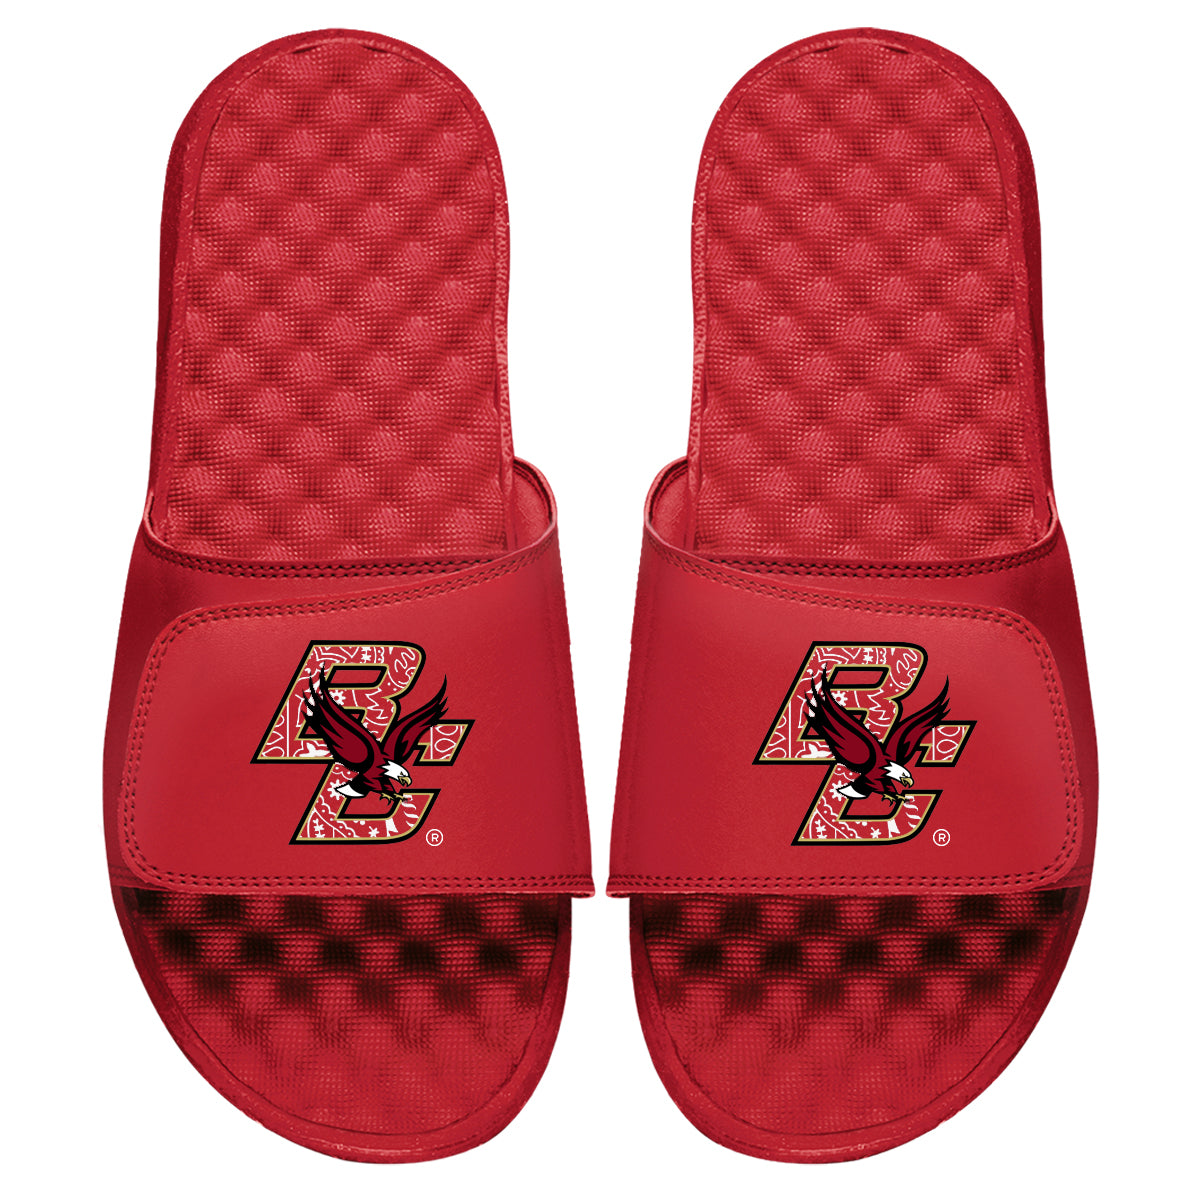 Boston College Red Bandana Slides